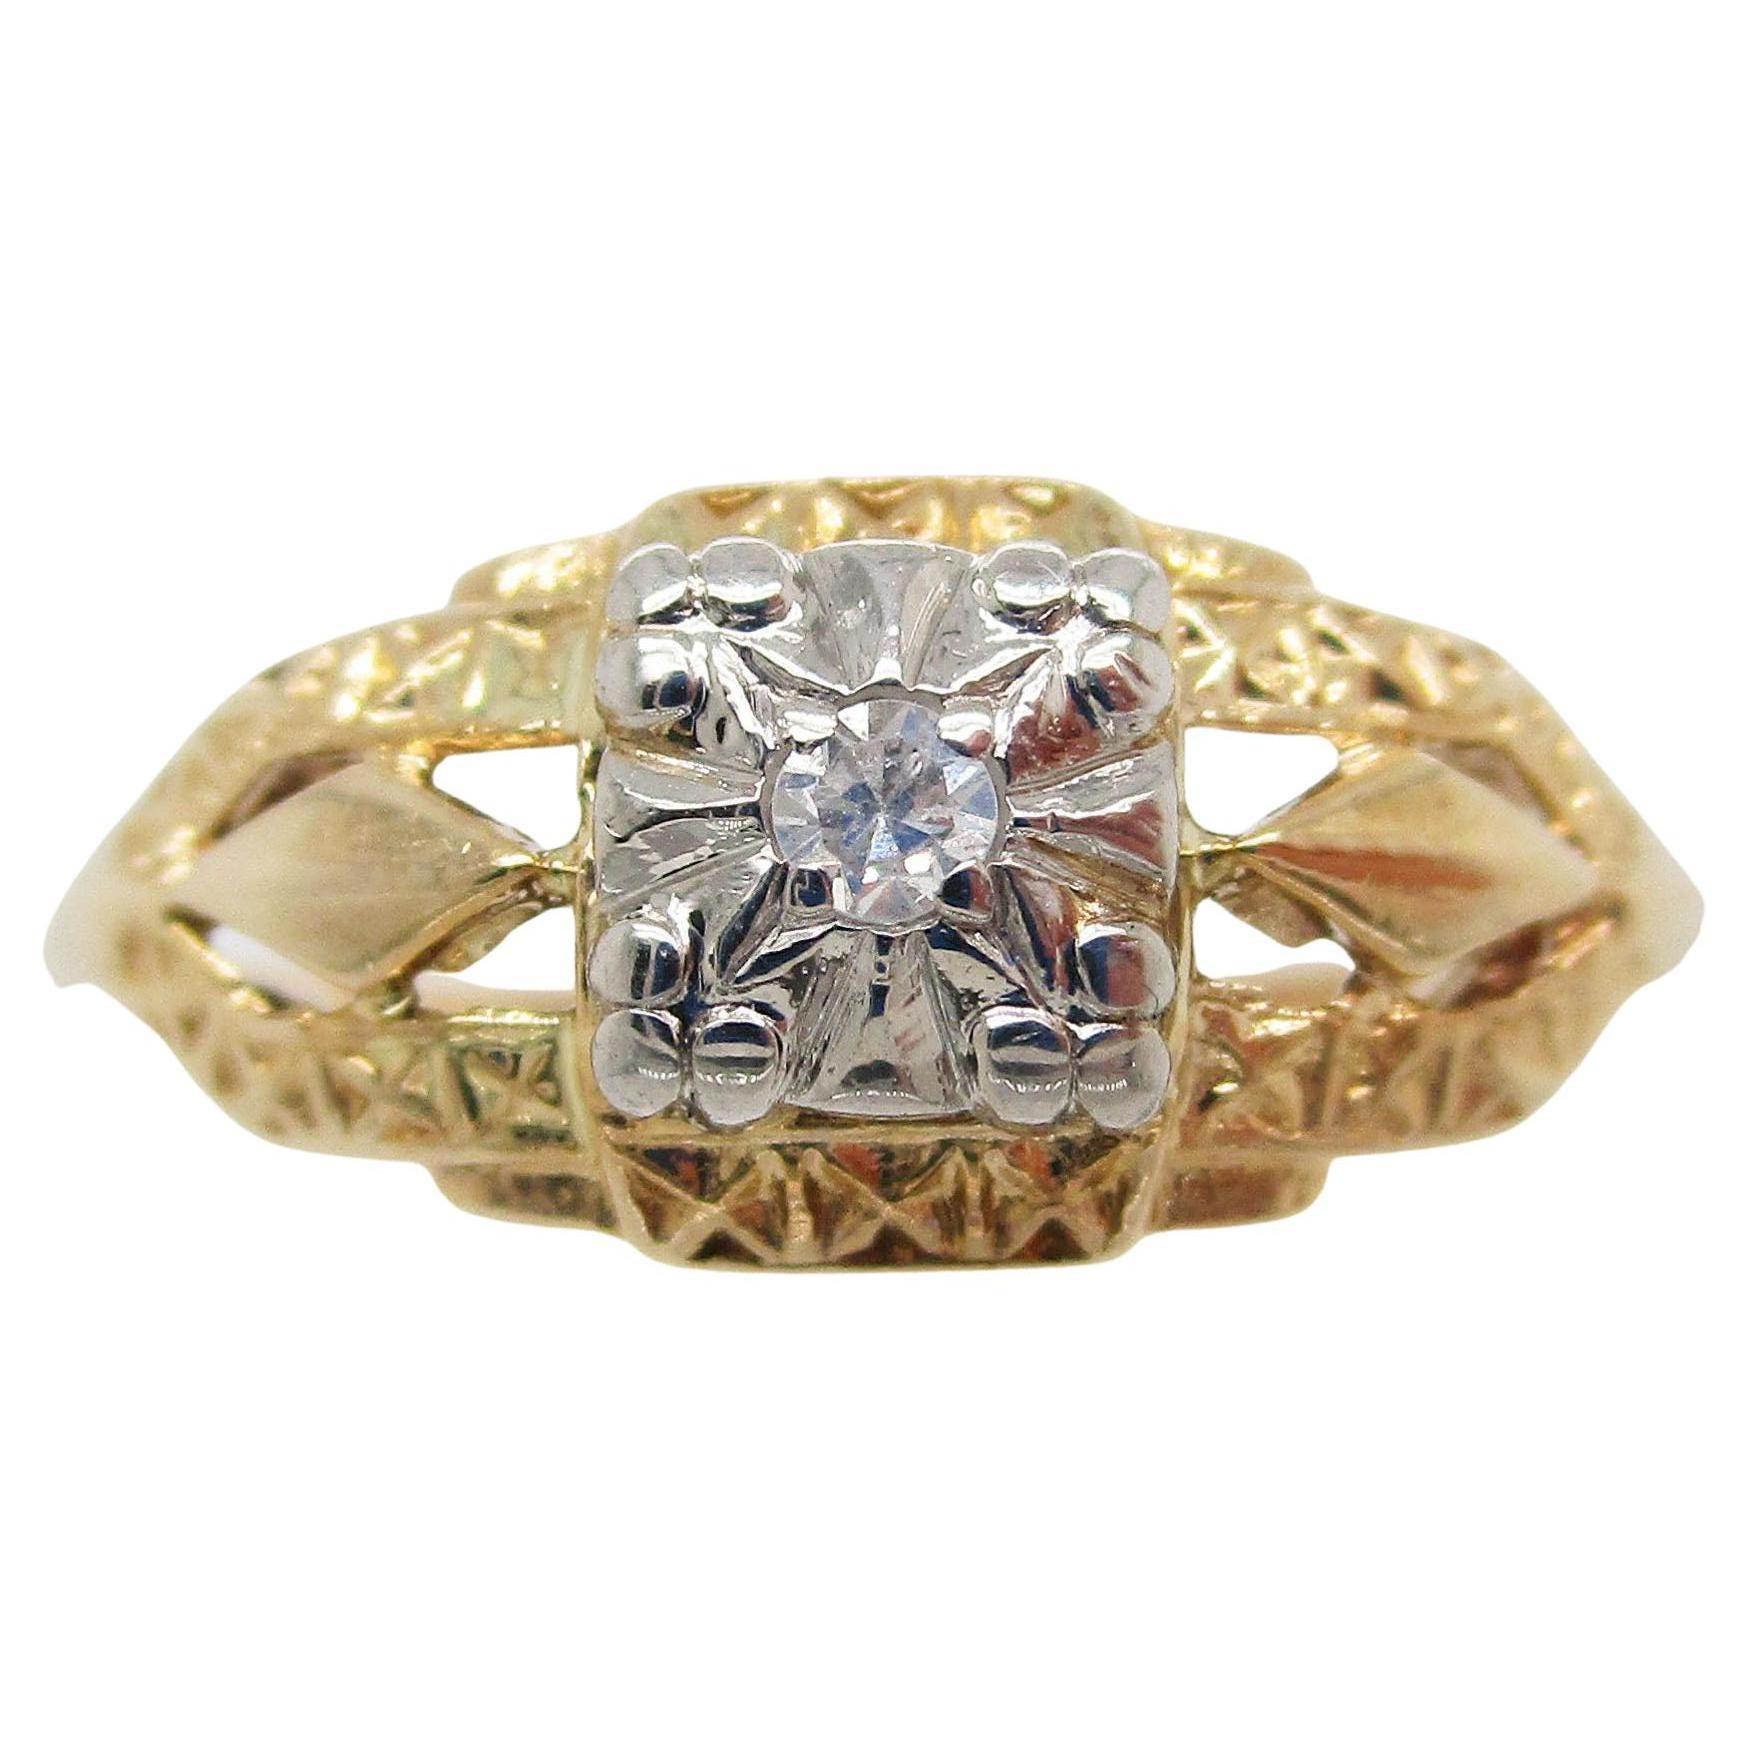 Vintage Mid-Century 14 Karat White and Yellow Gold Diamond Engagement Ring